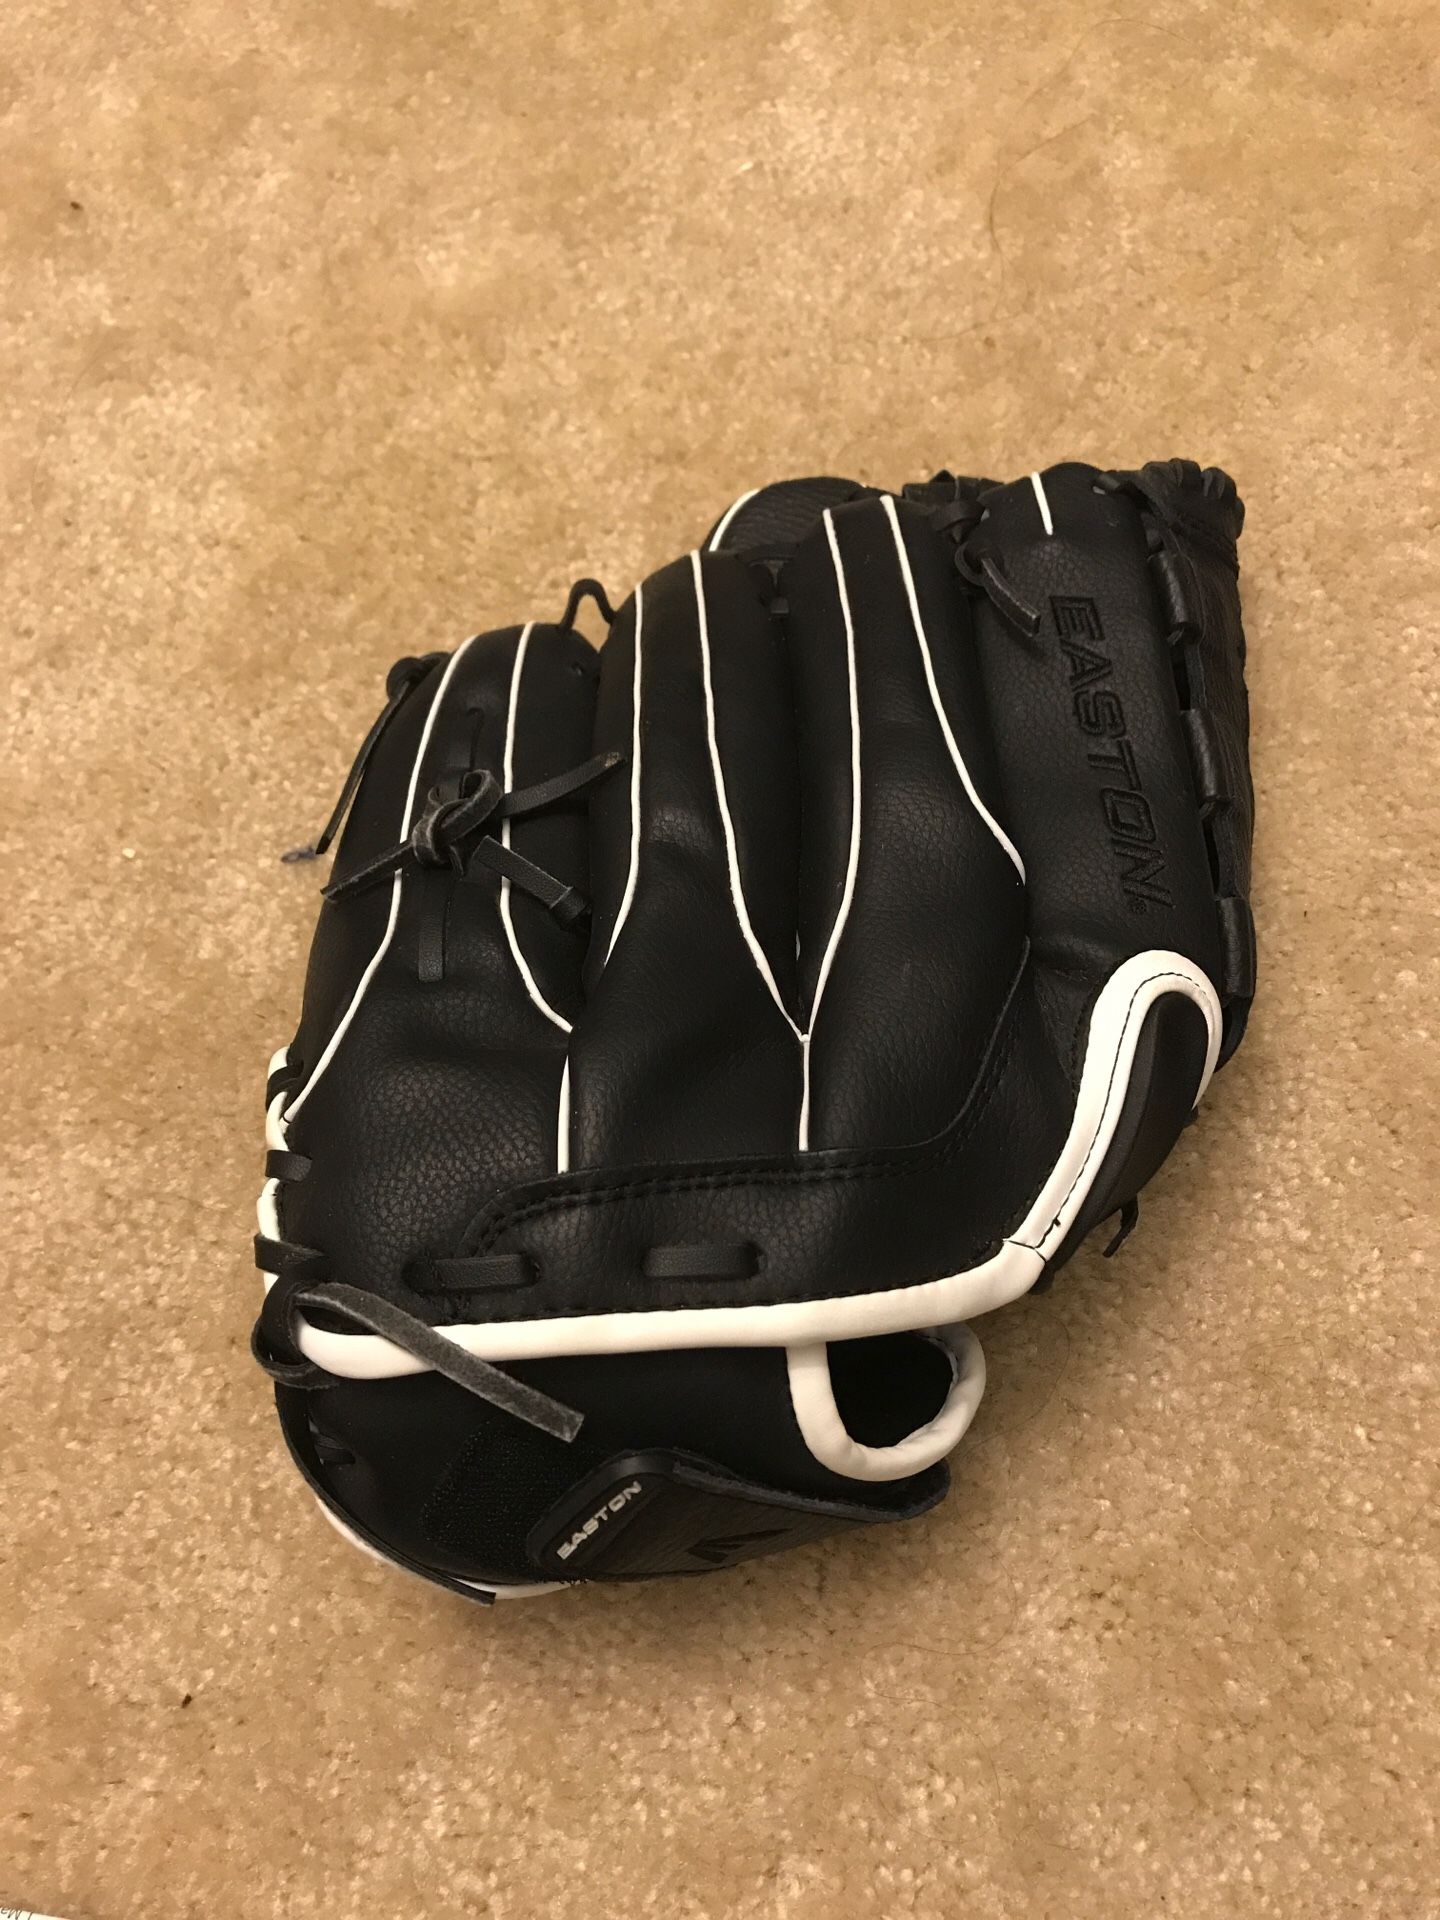 Easton VRS Palm Pad softball Glove